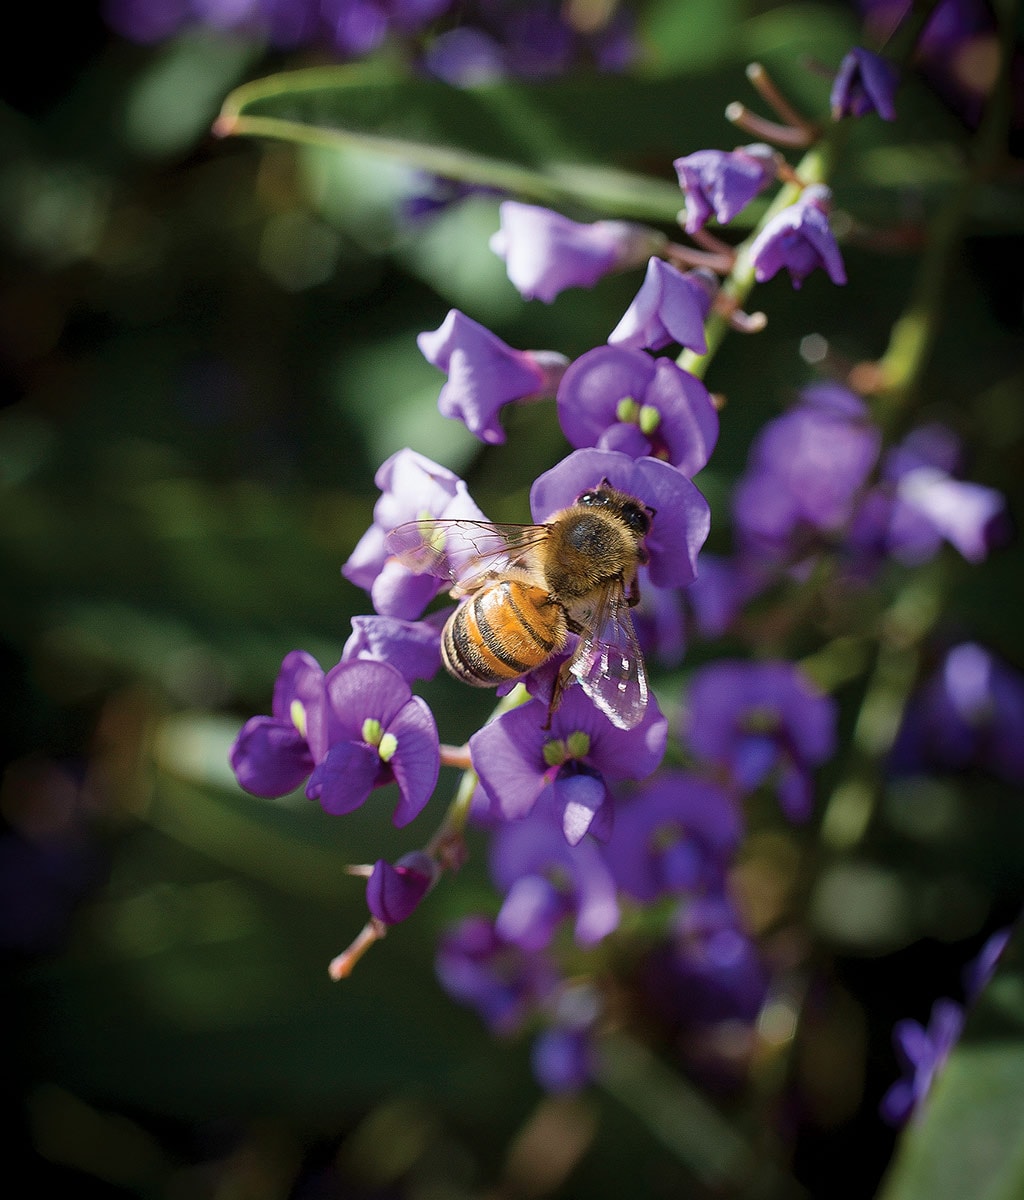 a honeybee on a flower